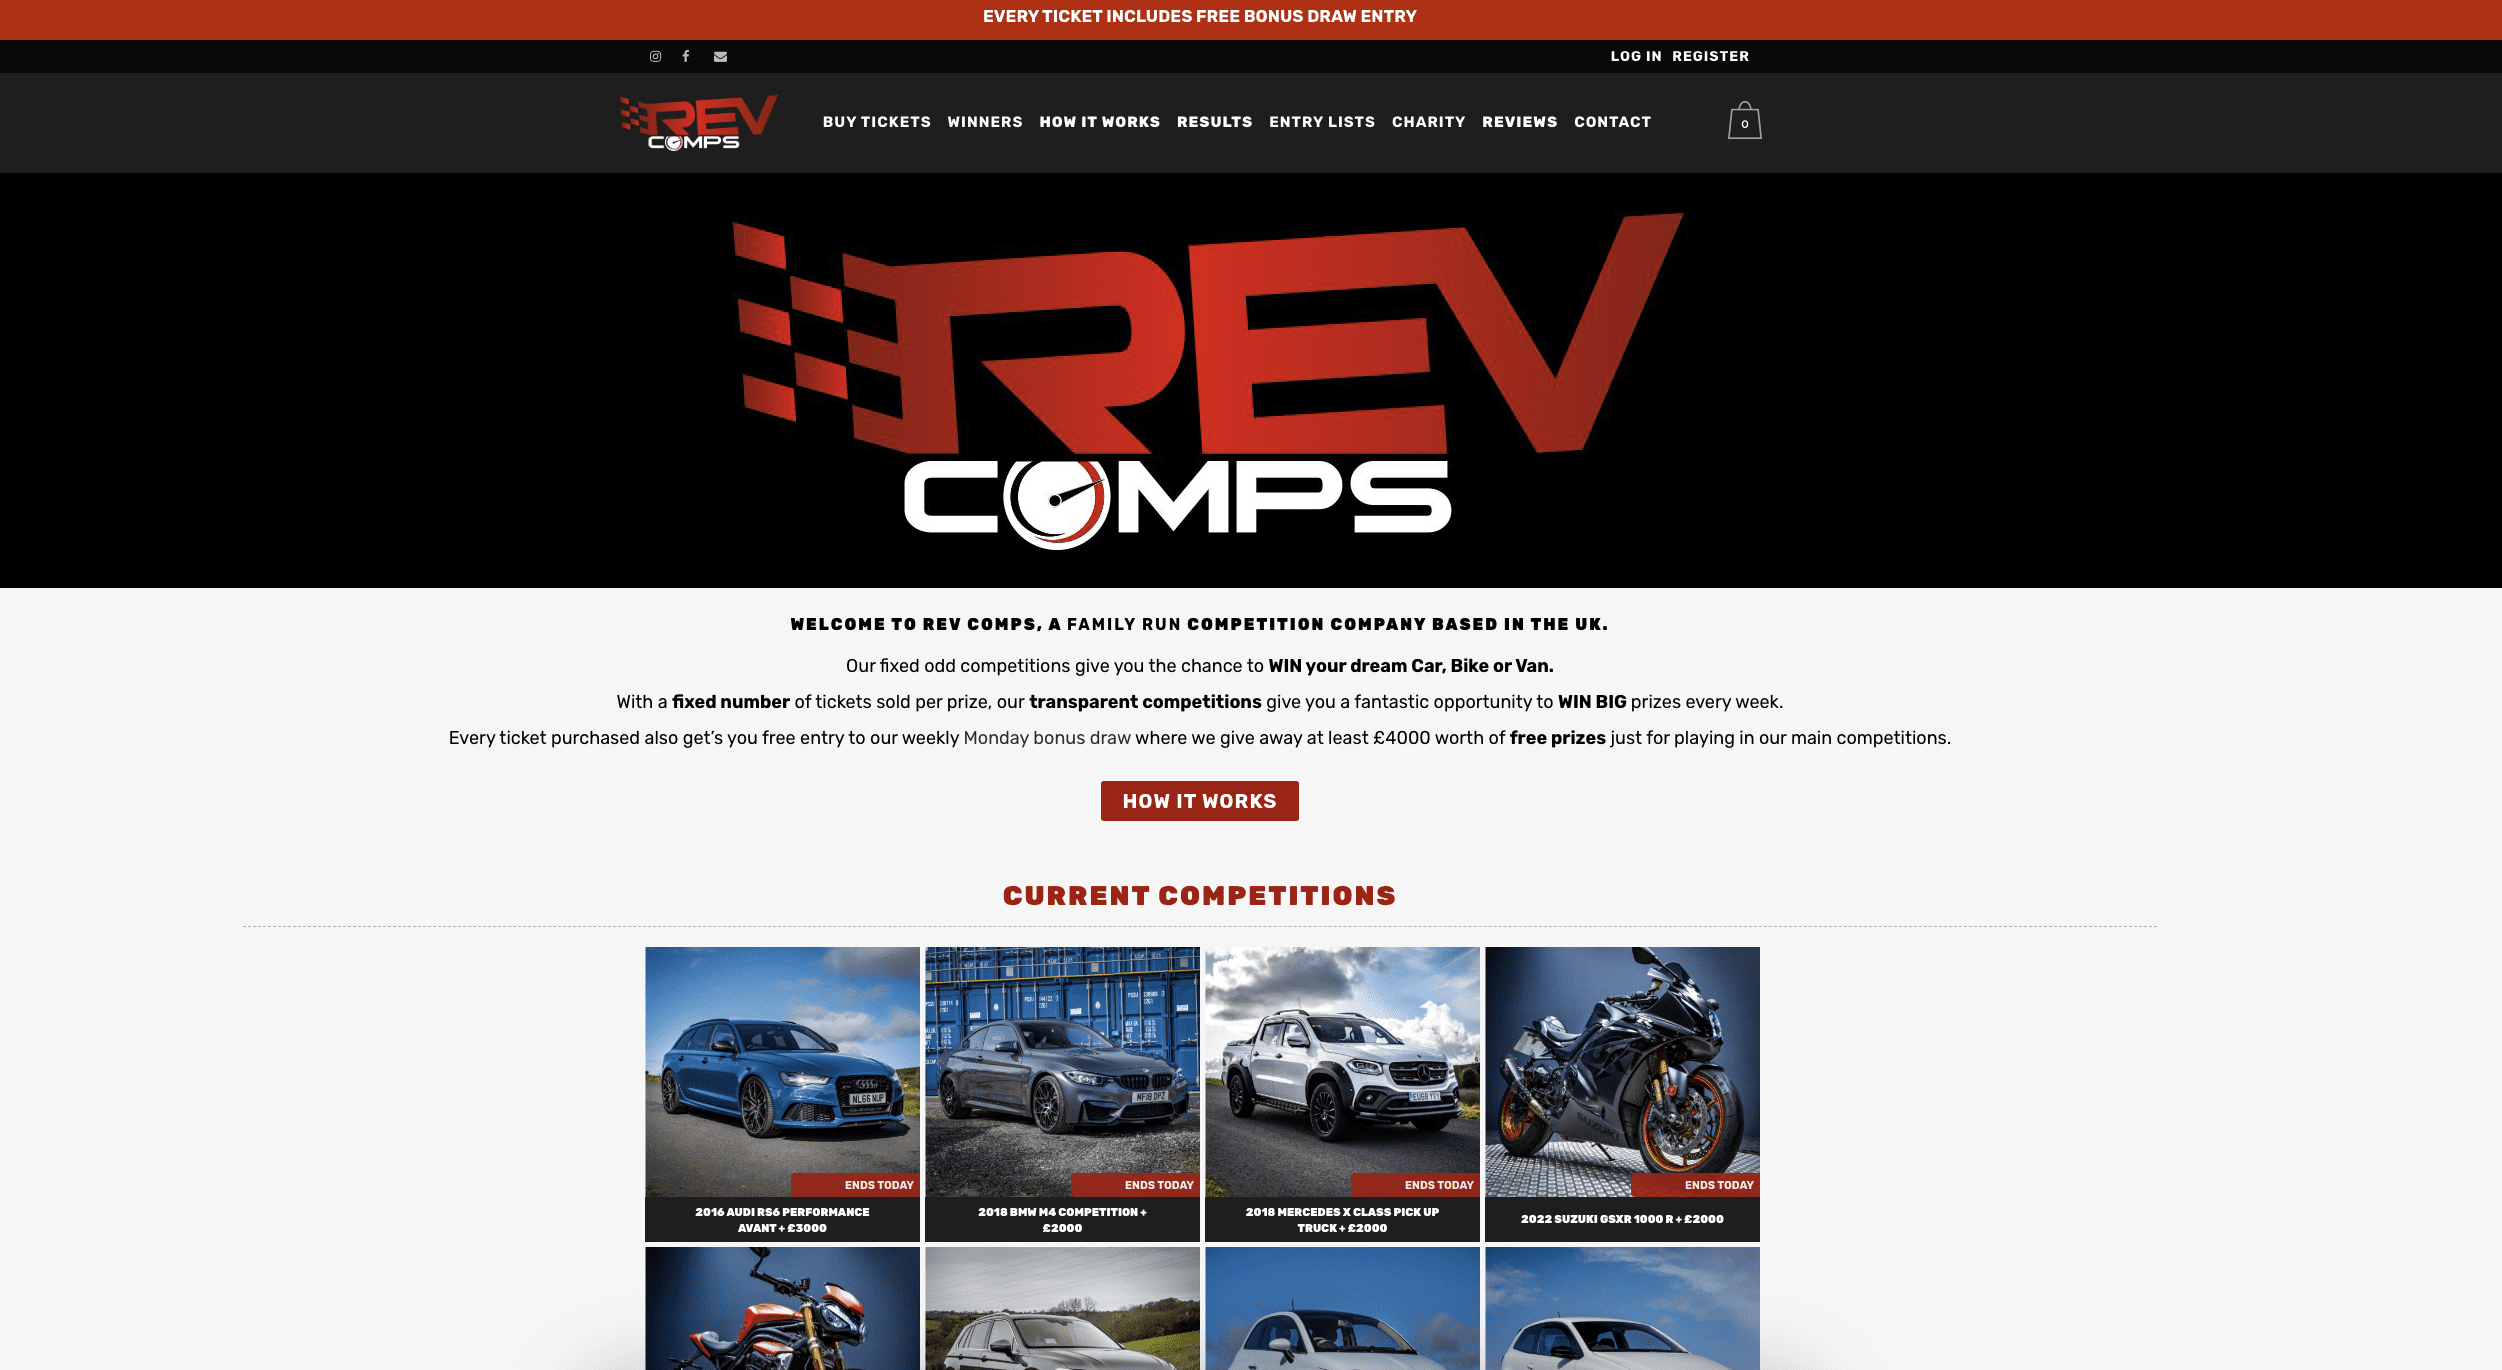 RevComps case study